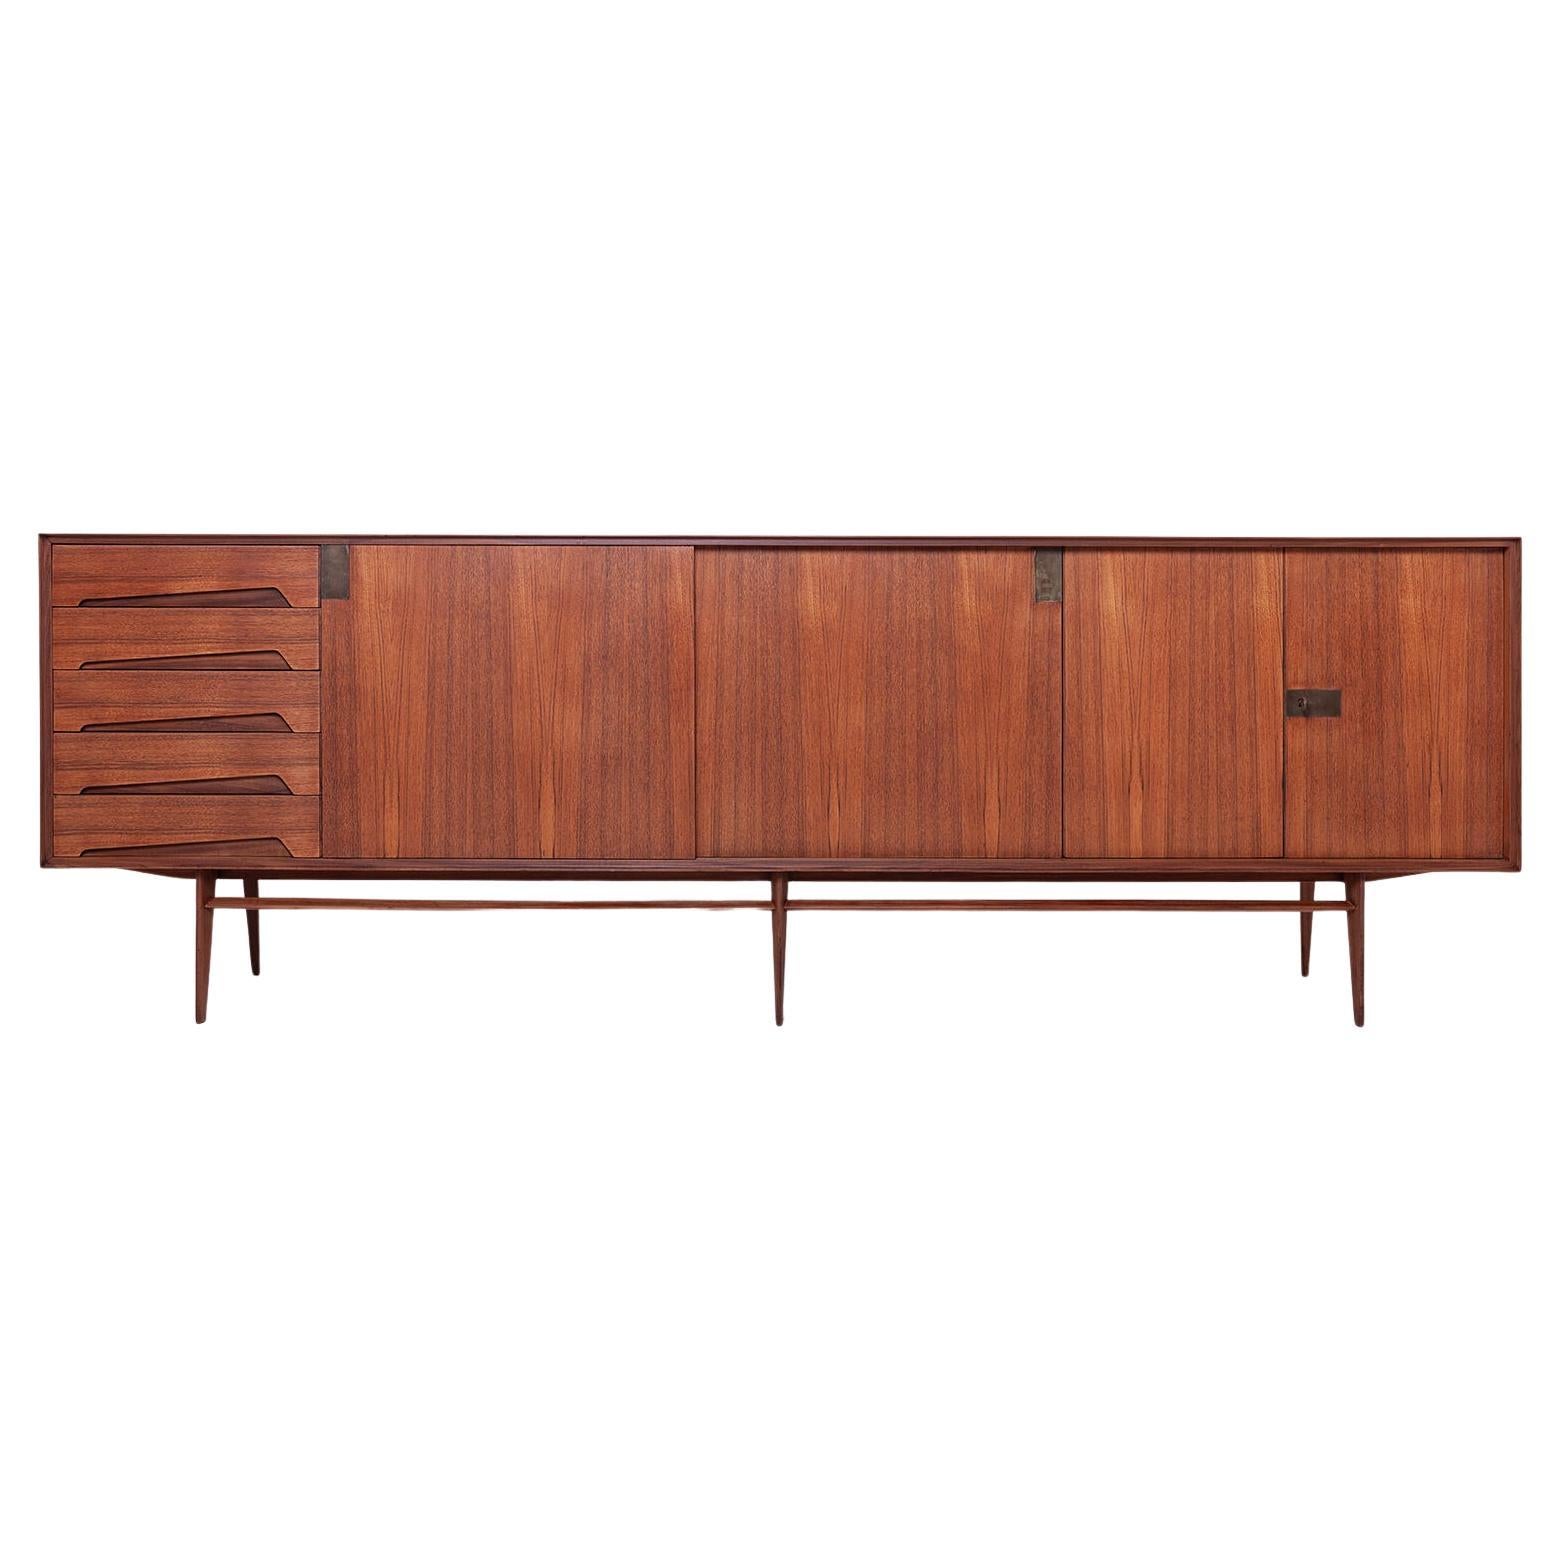 Vintage Midcentury Sideboard: Edmondo Palutari Design, Teak Wood & Brass Details For Sale